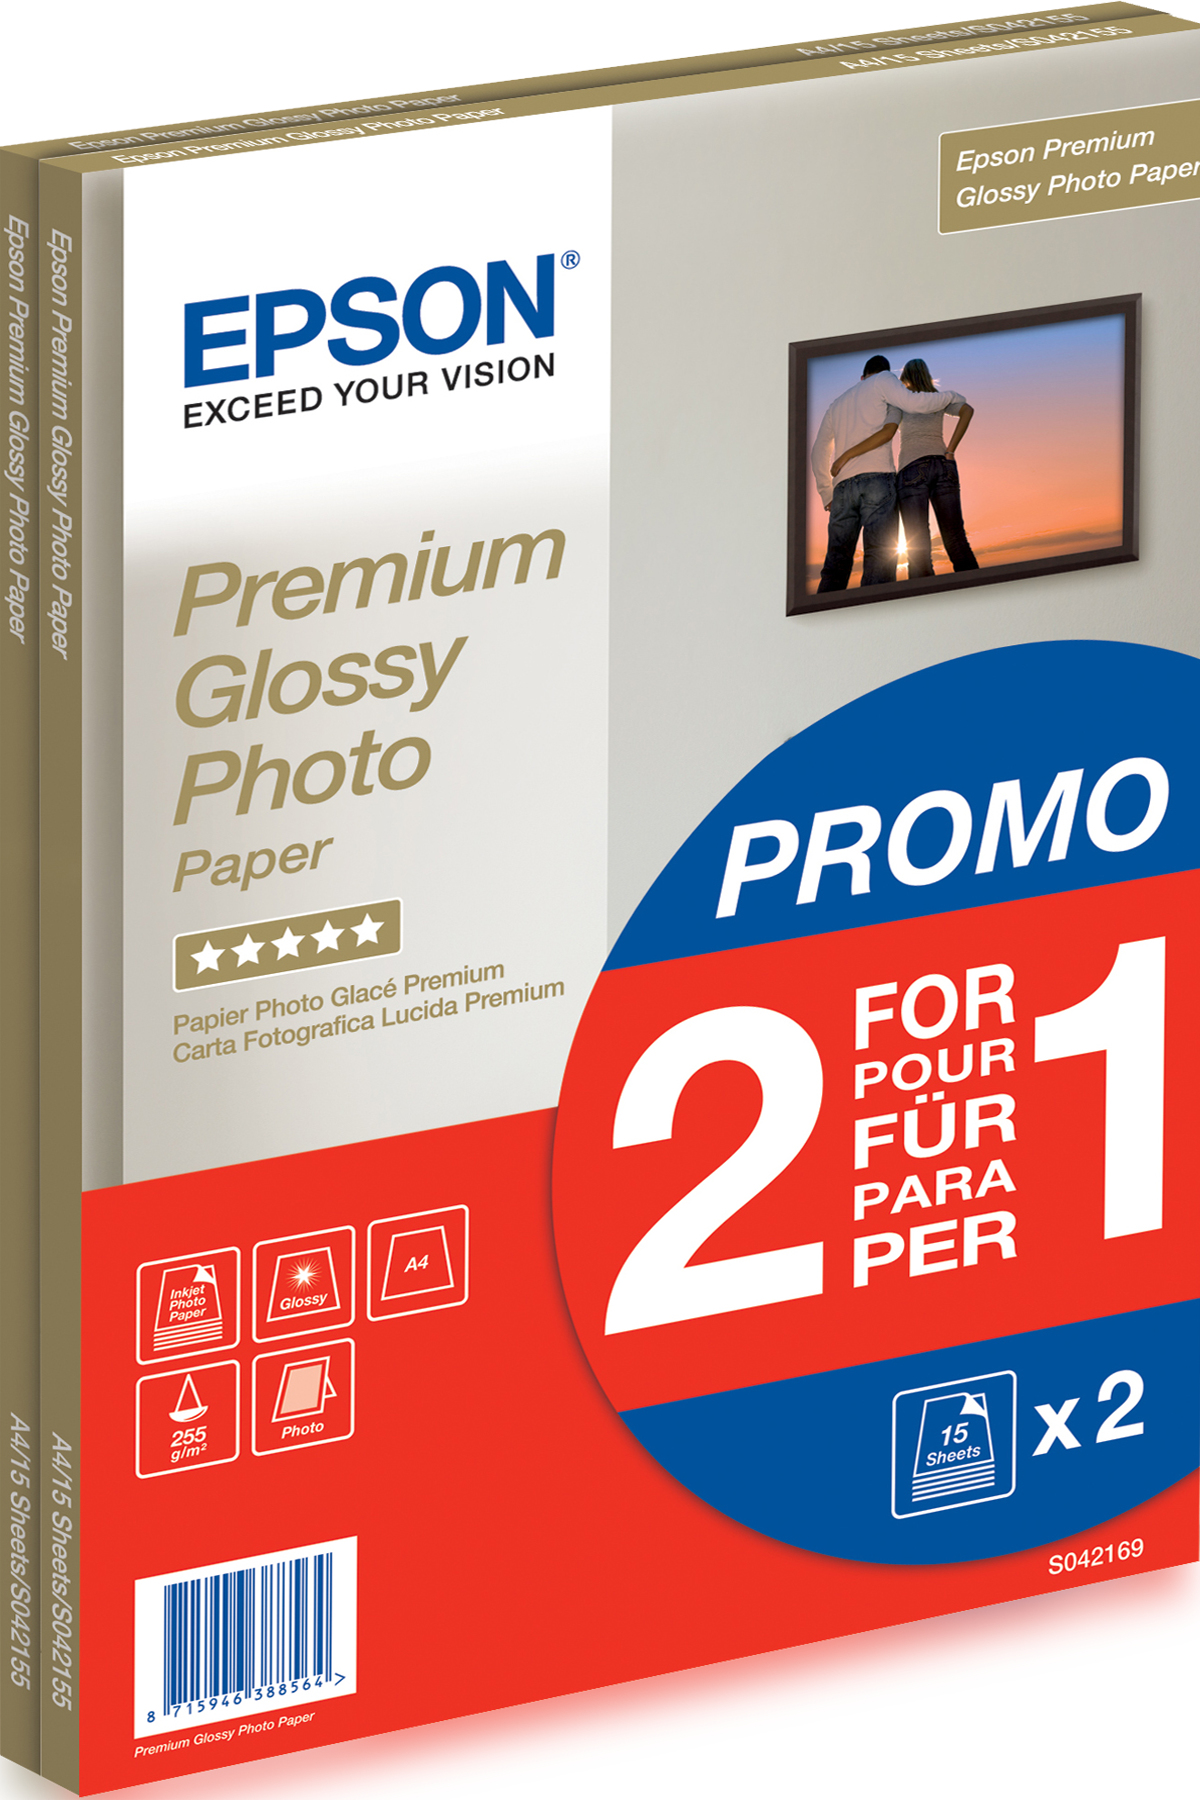  Premium glossy photo paper inktjet 255g/m2 A4 2x15 sheets 1-pack BOGOF